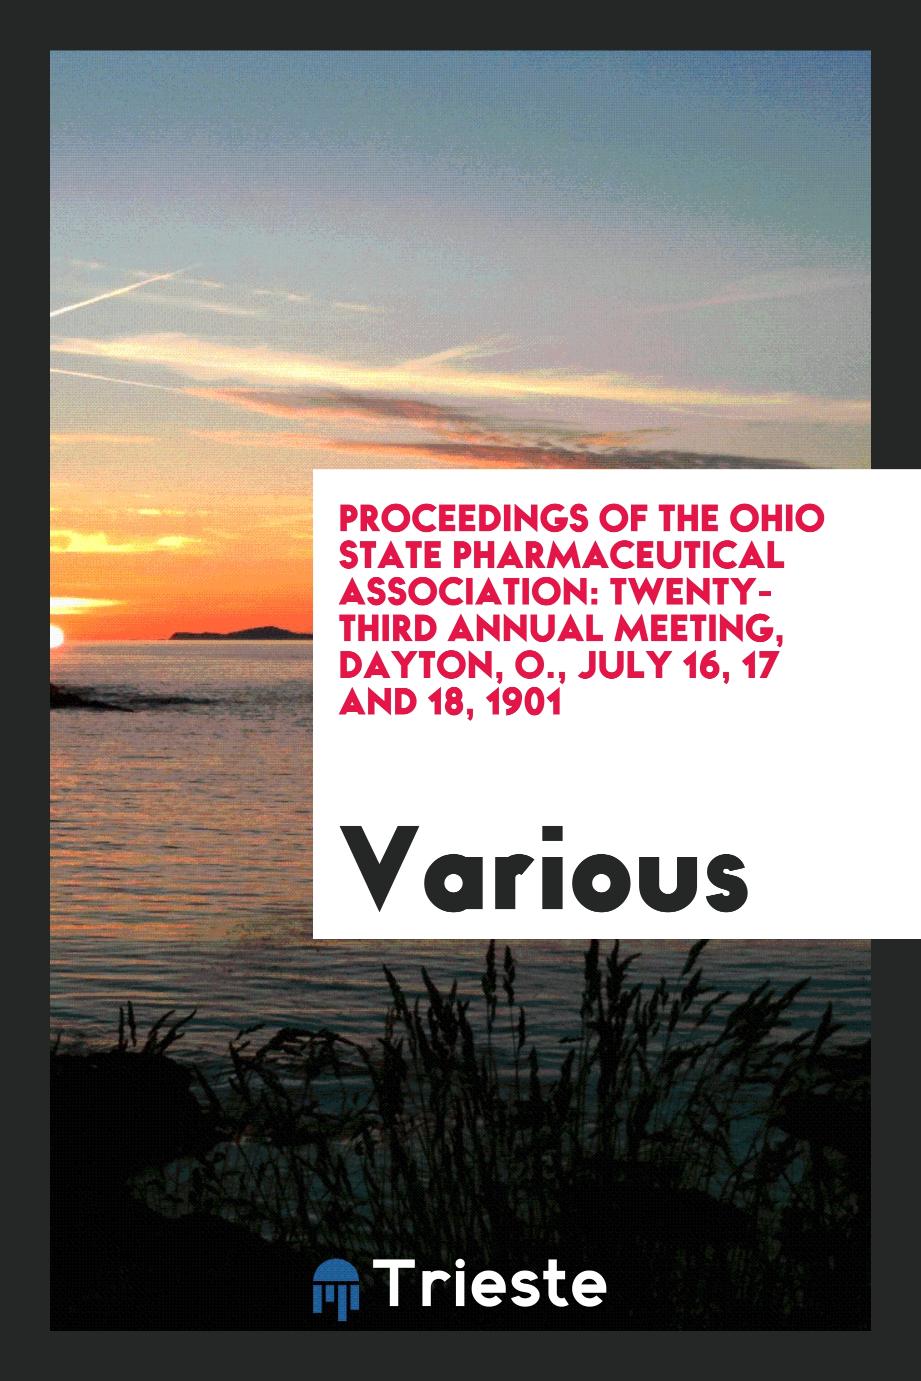 Proceedings of the Ohio State Pharmaceutical Association: Twenty-Third Annual Meeting, Dayton, O., July 16, 17 and 18, 1901